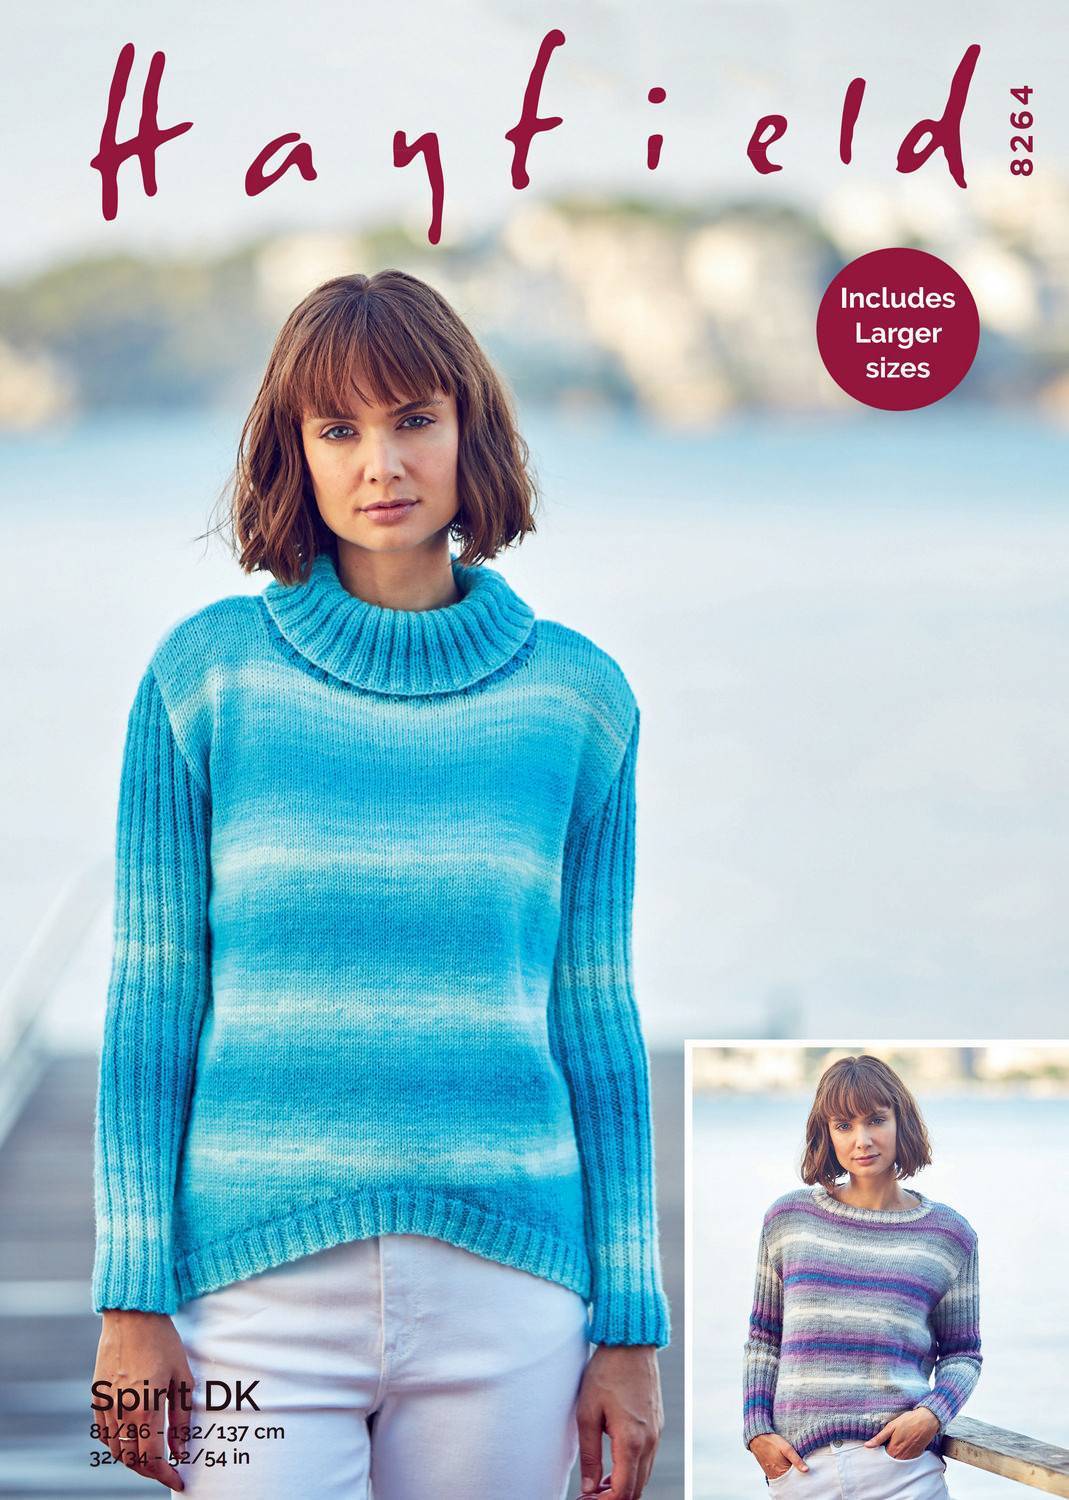 Sweaters in Hayfield Spirit DK (8264) | The Knitting Network